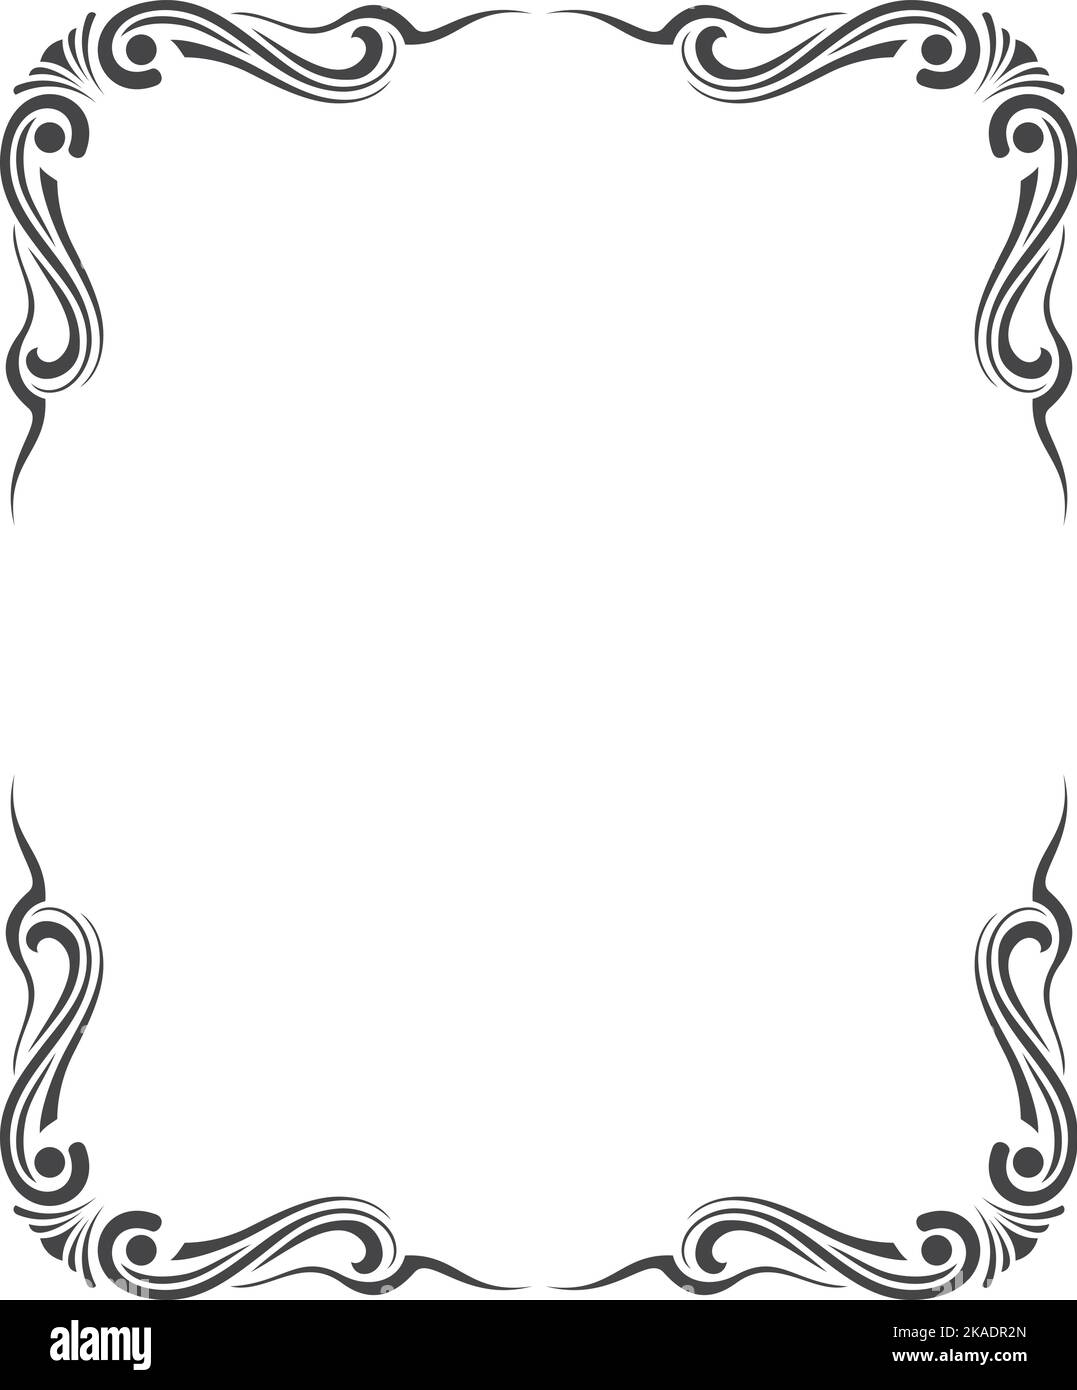 Flourish ornate corners. Calligraphic decorative frame border Stock Vector